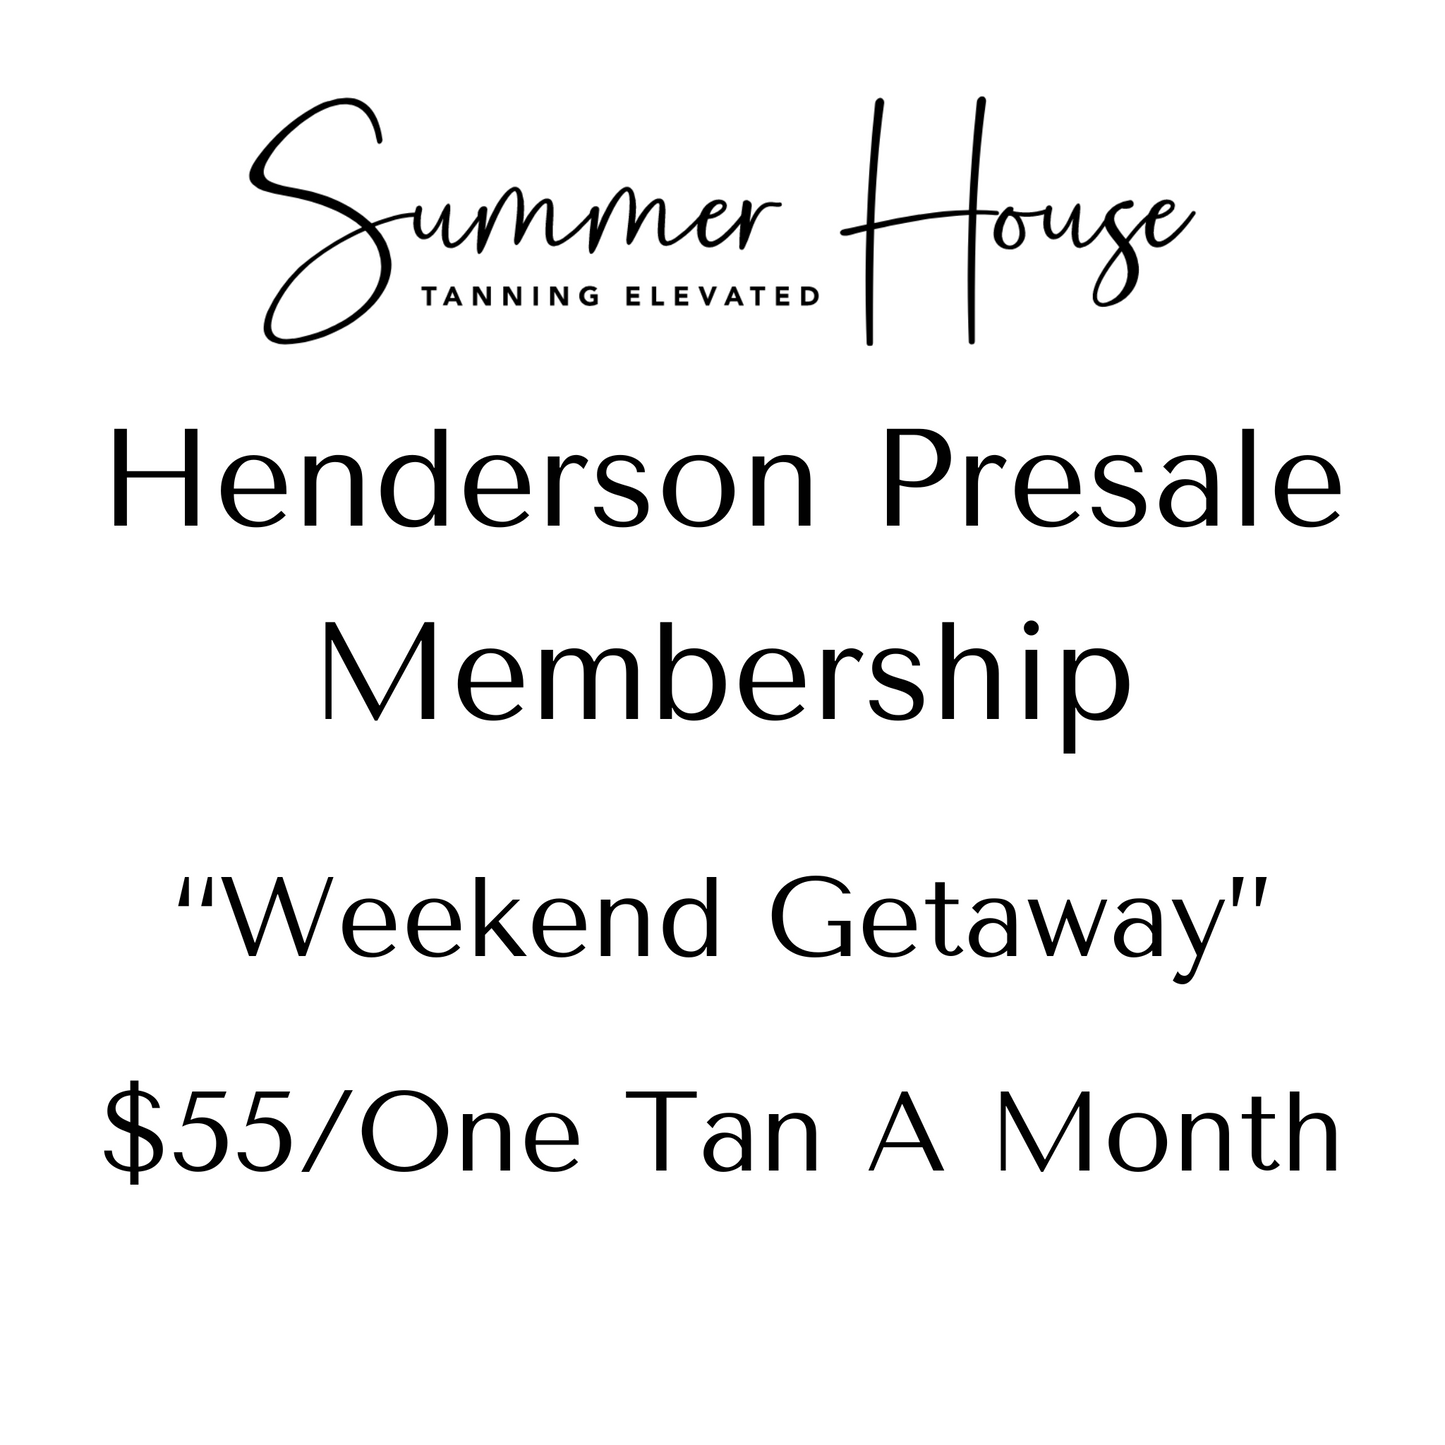 *Pre-Sale Membership $55/month - One Tan A Month